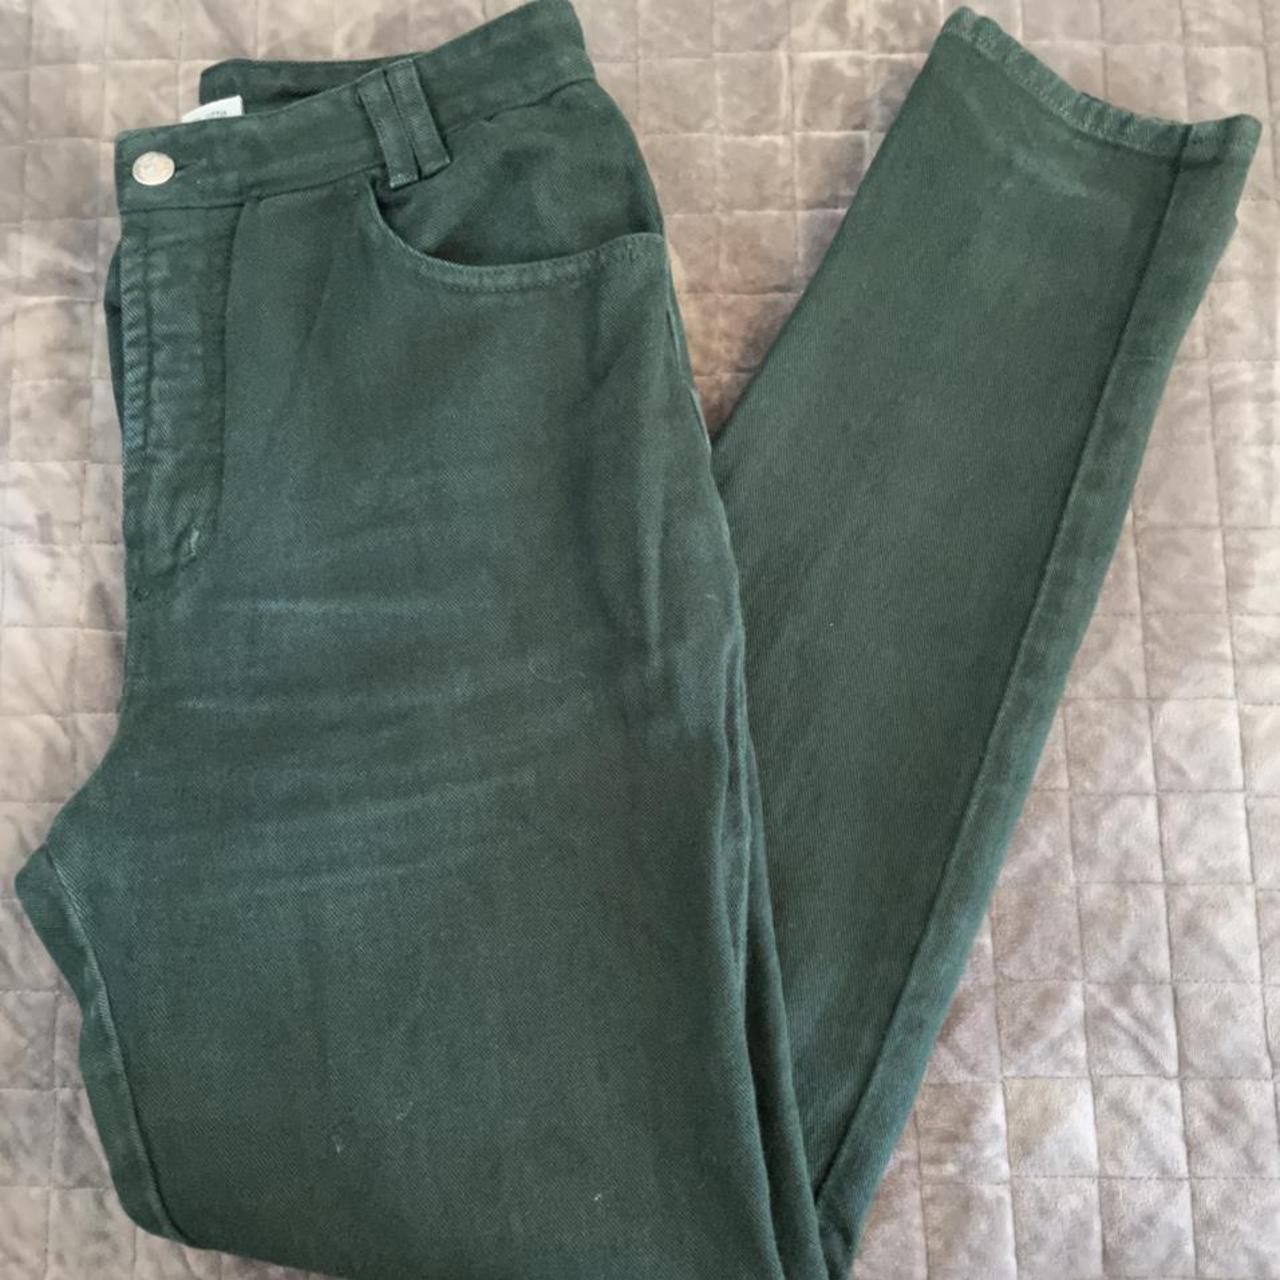 Emerald green baggy jeans - Depop